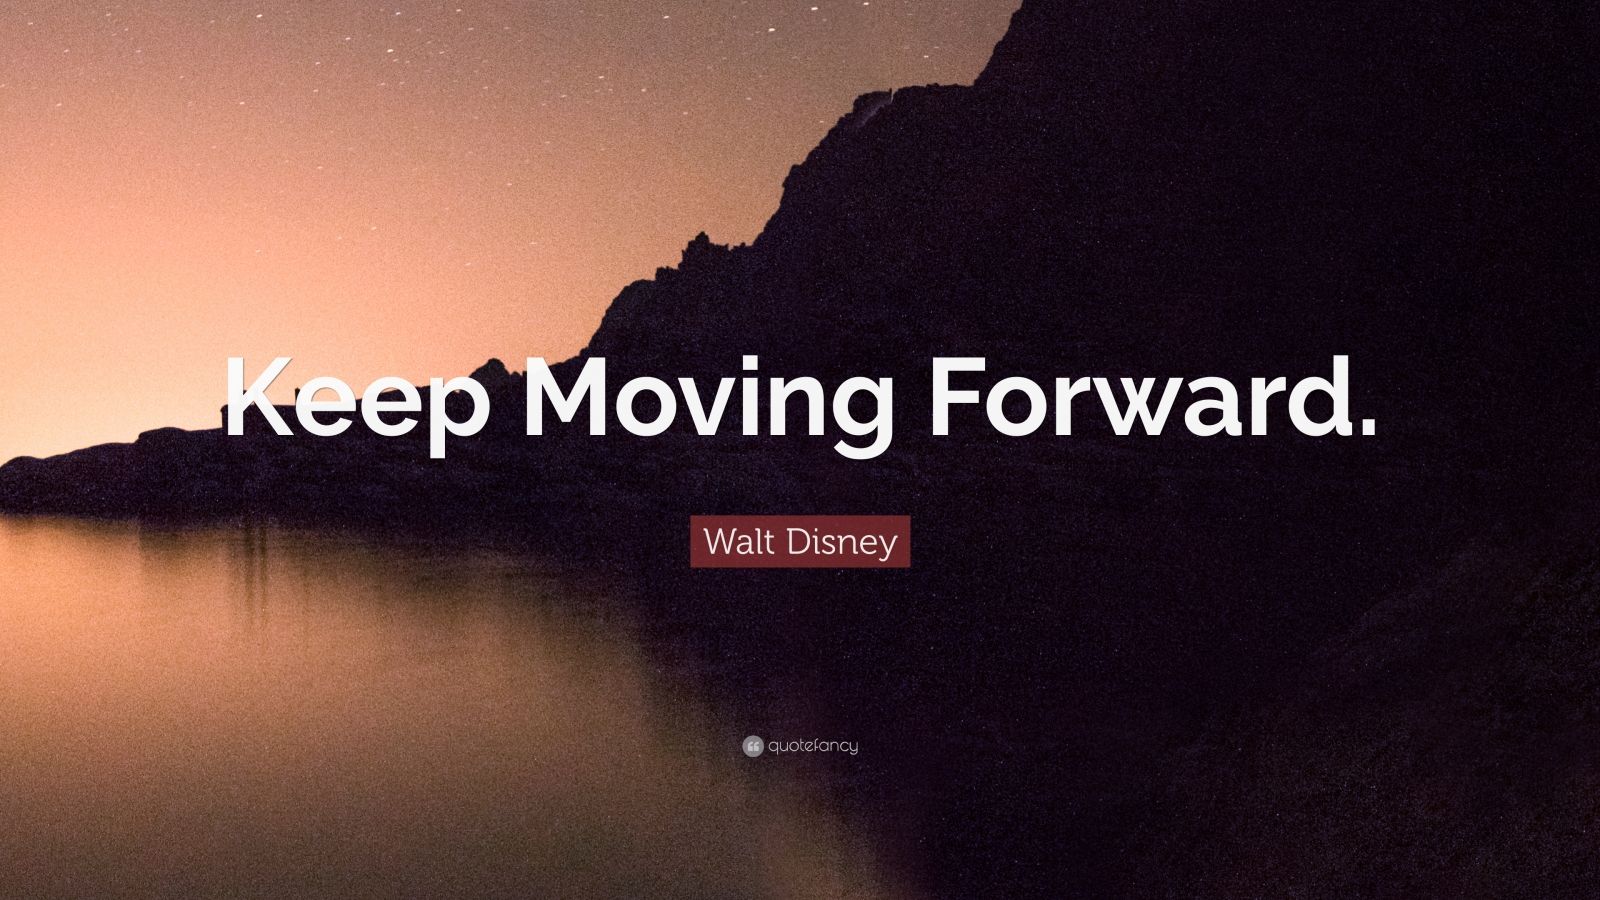 walt disney quote keep moving forward